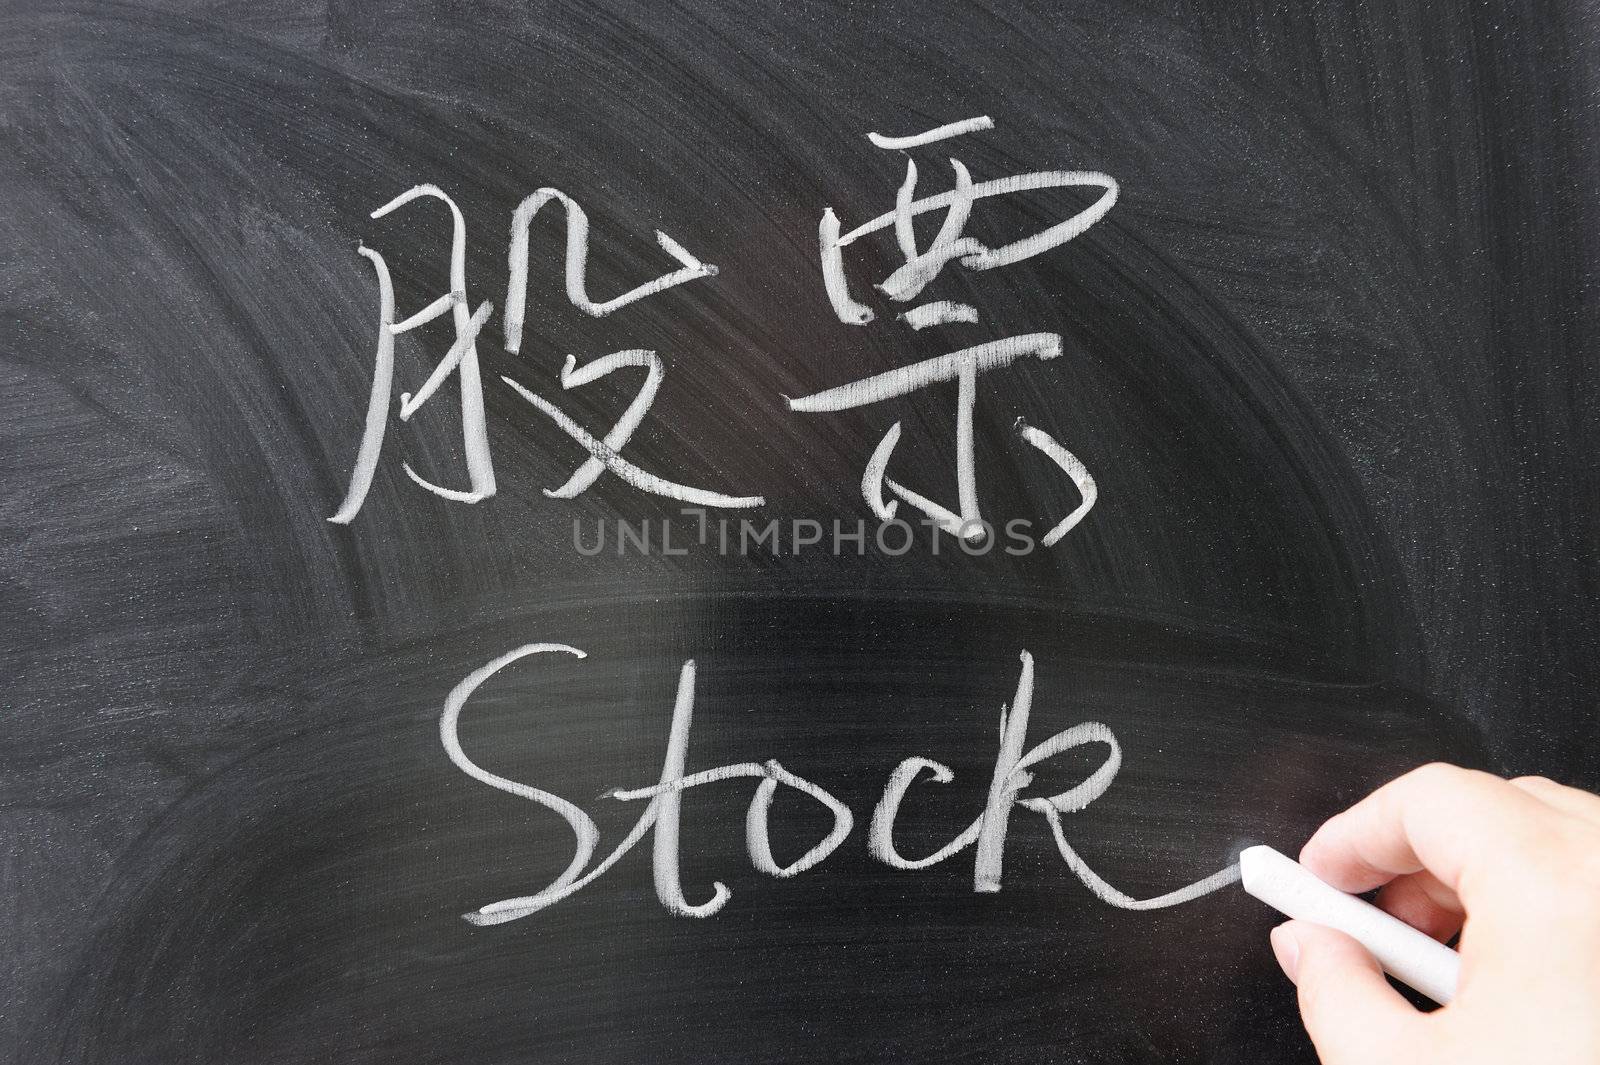 Bilingual stock word in Chinese and English written on the blackboard